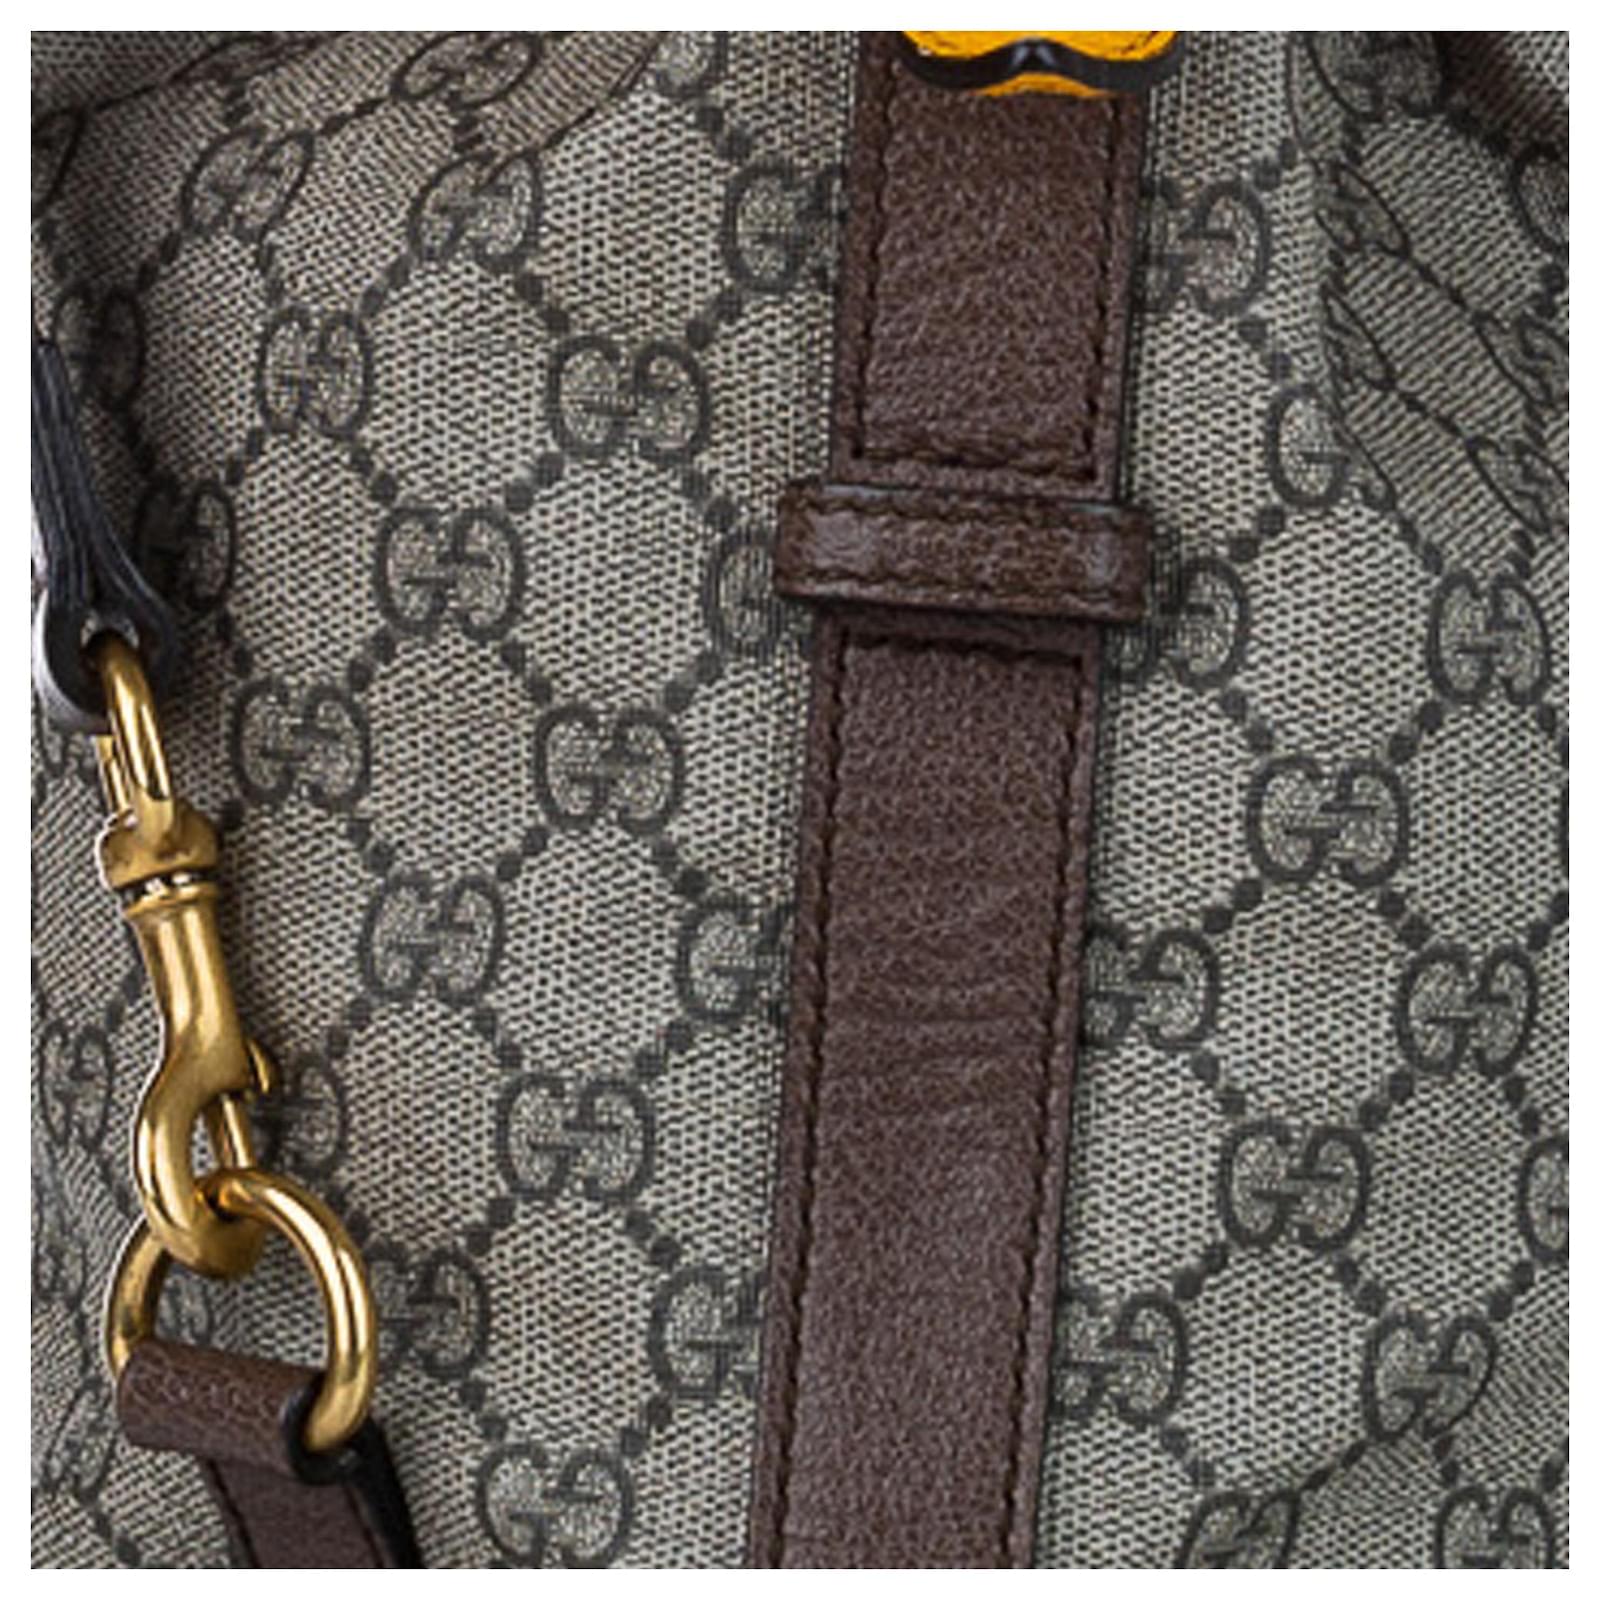 Gucci Beige & Brown GG Supreme Backpack - ShopStyle